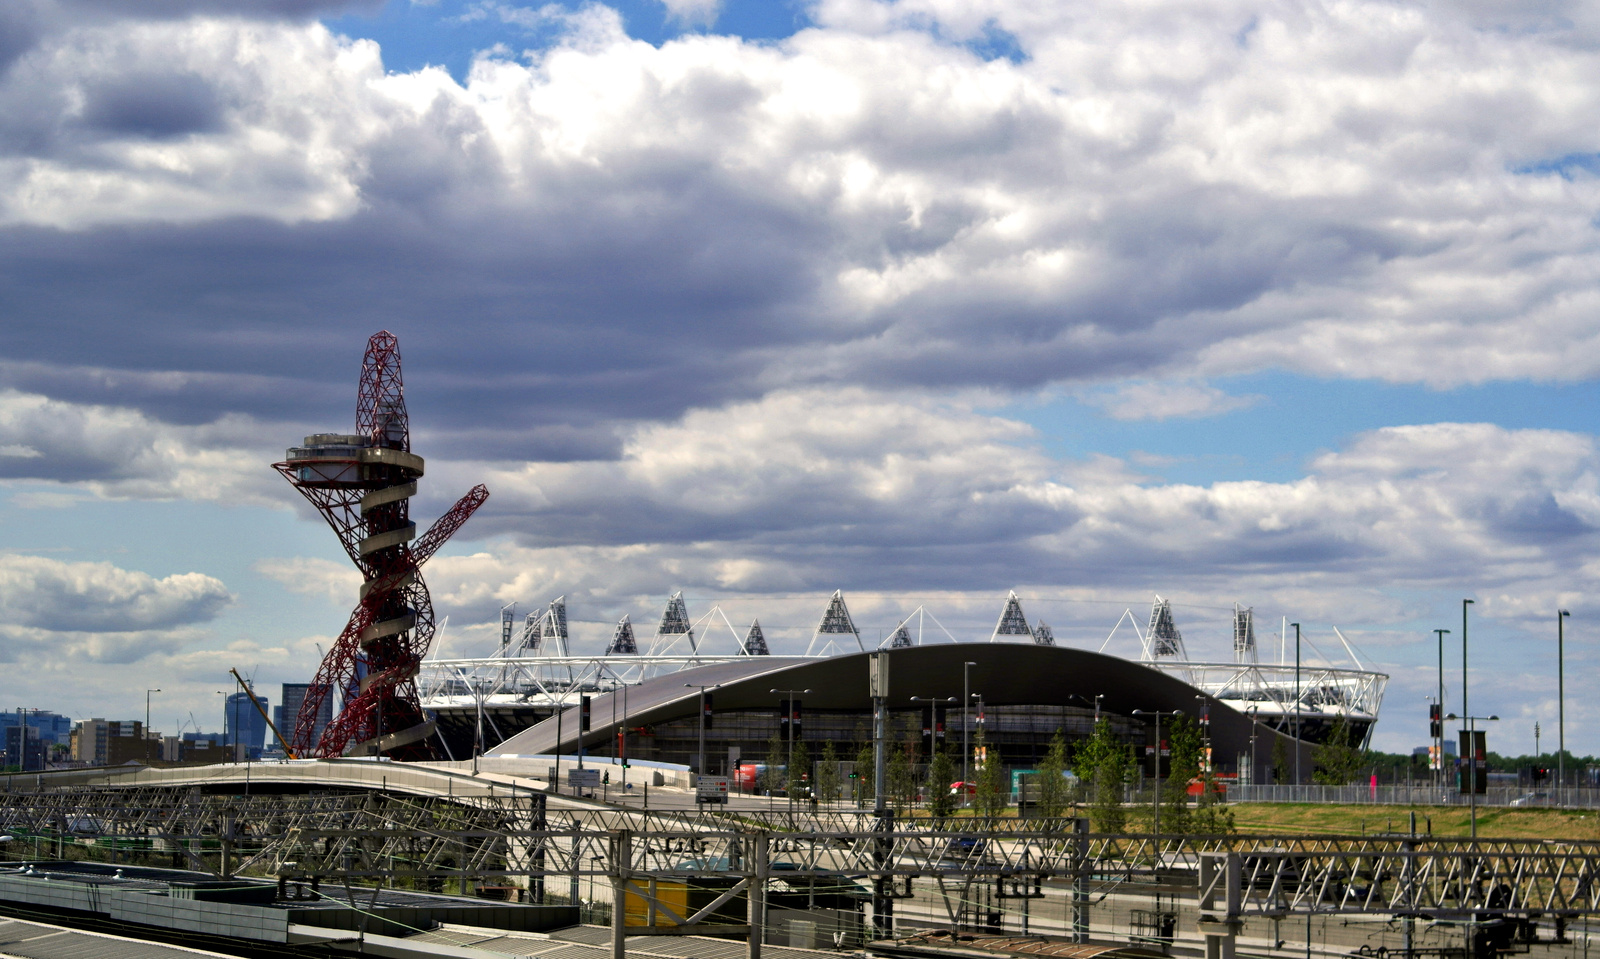 Queen Elizabeth Olympic Park via Stratford Station